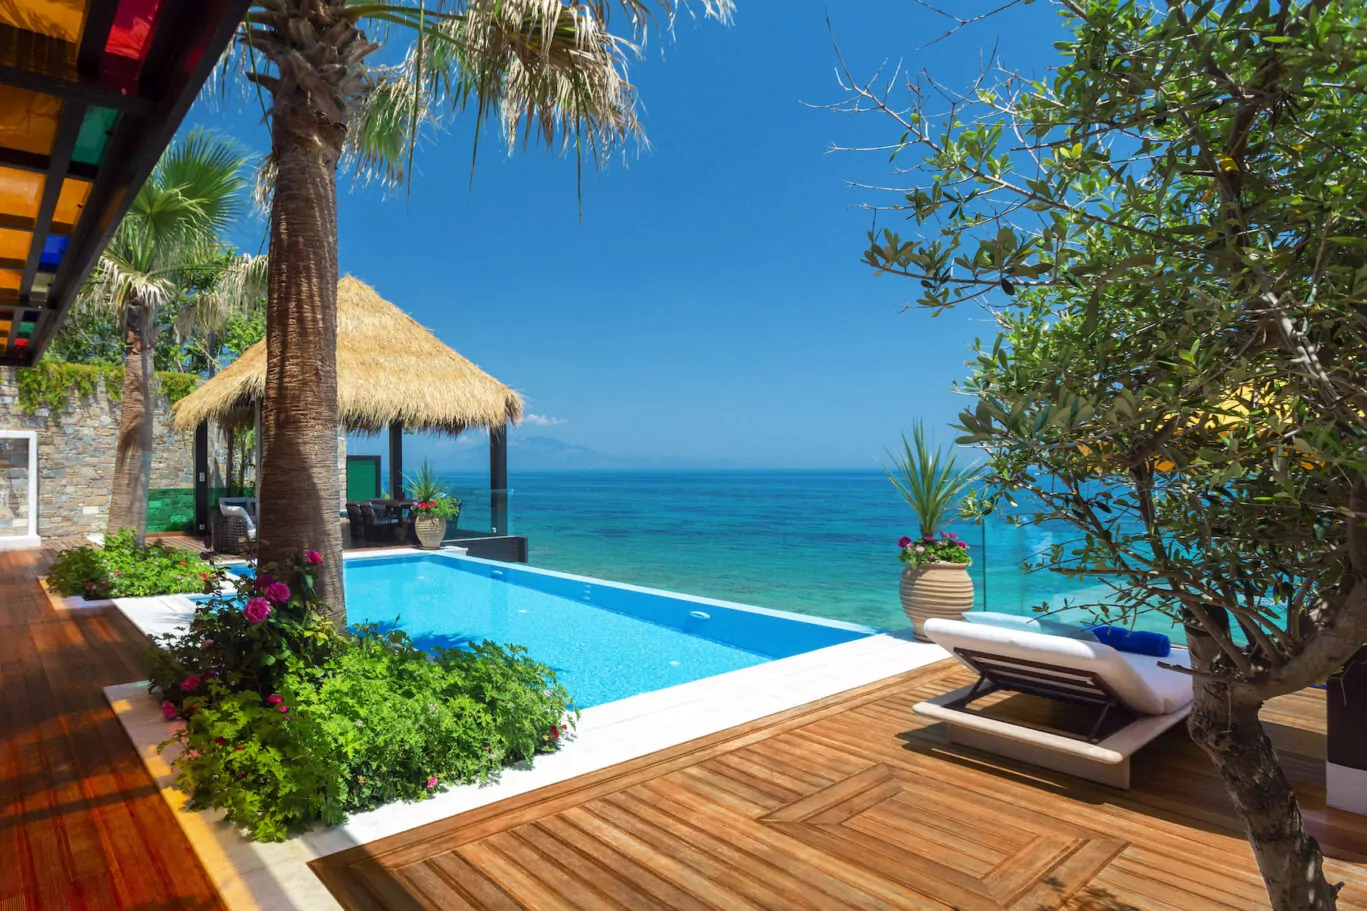 Royal Infinity Villa Greece 5-Star Exclusive Two-Bedroom Beachfront Luxury Villa exterior pool